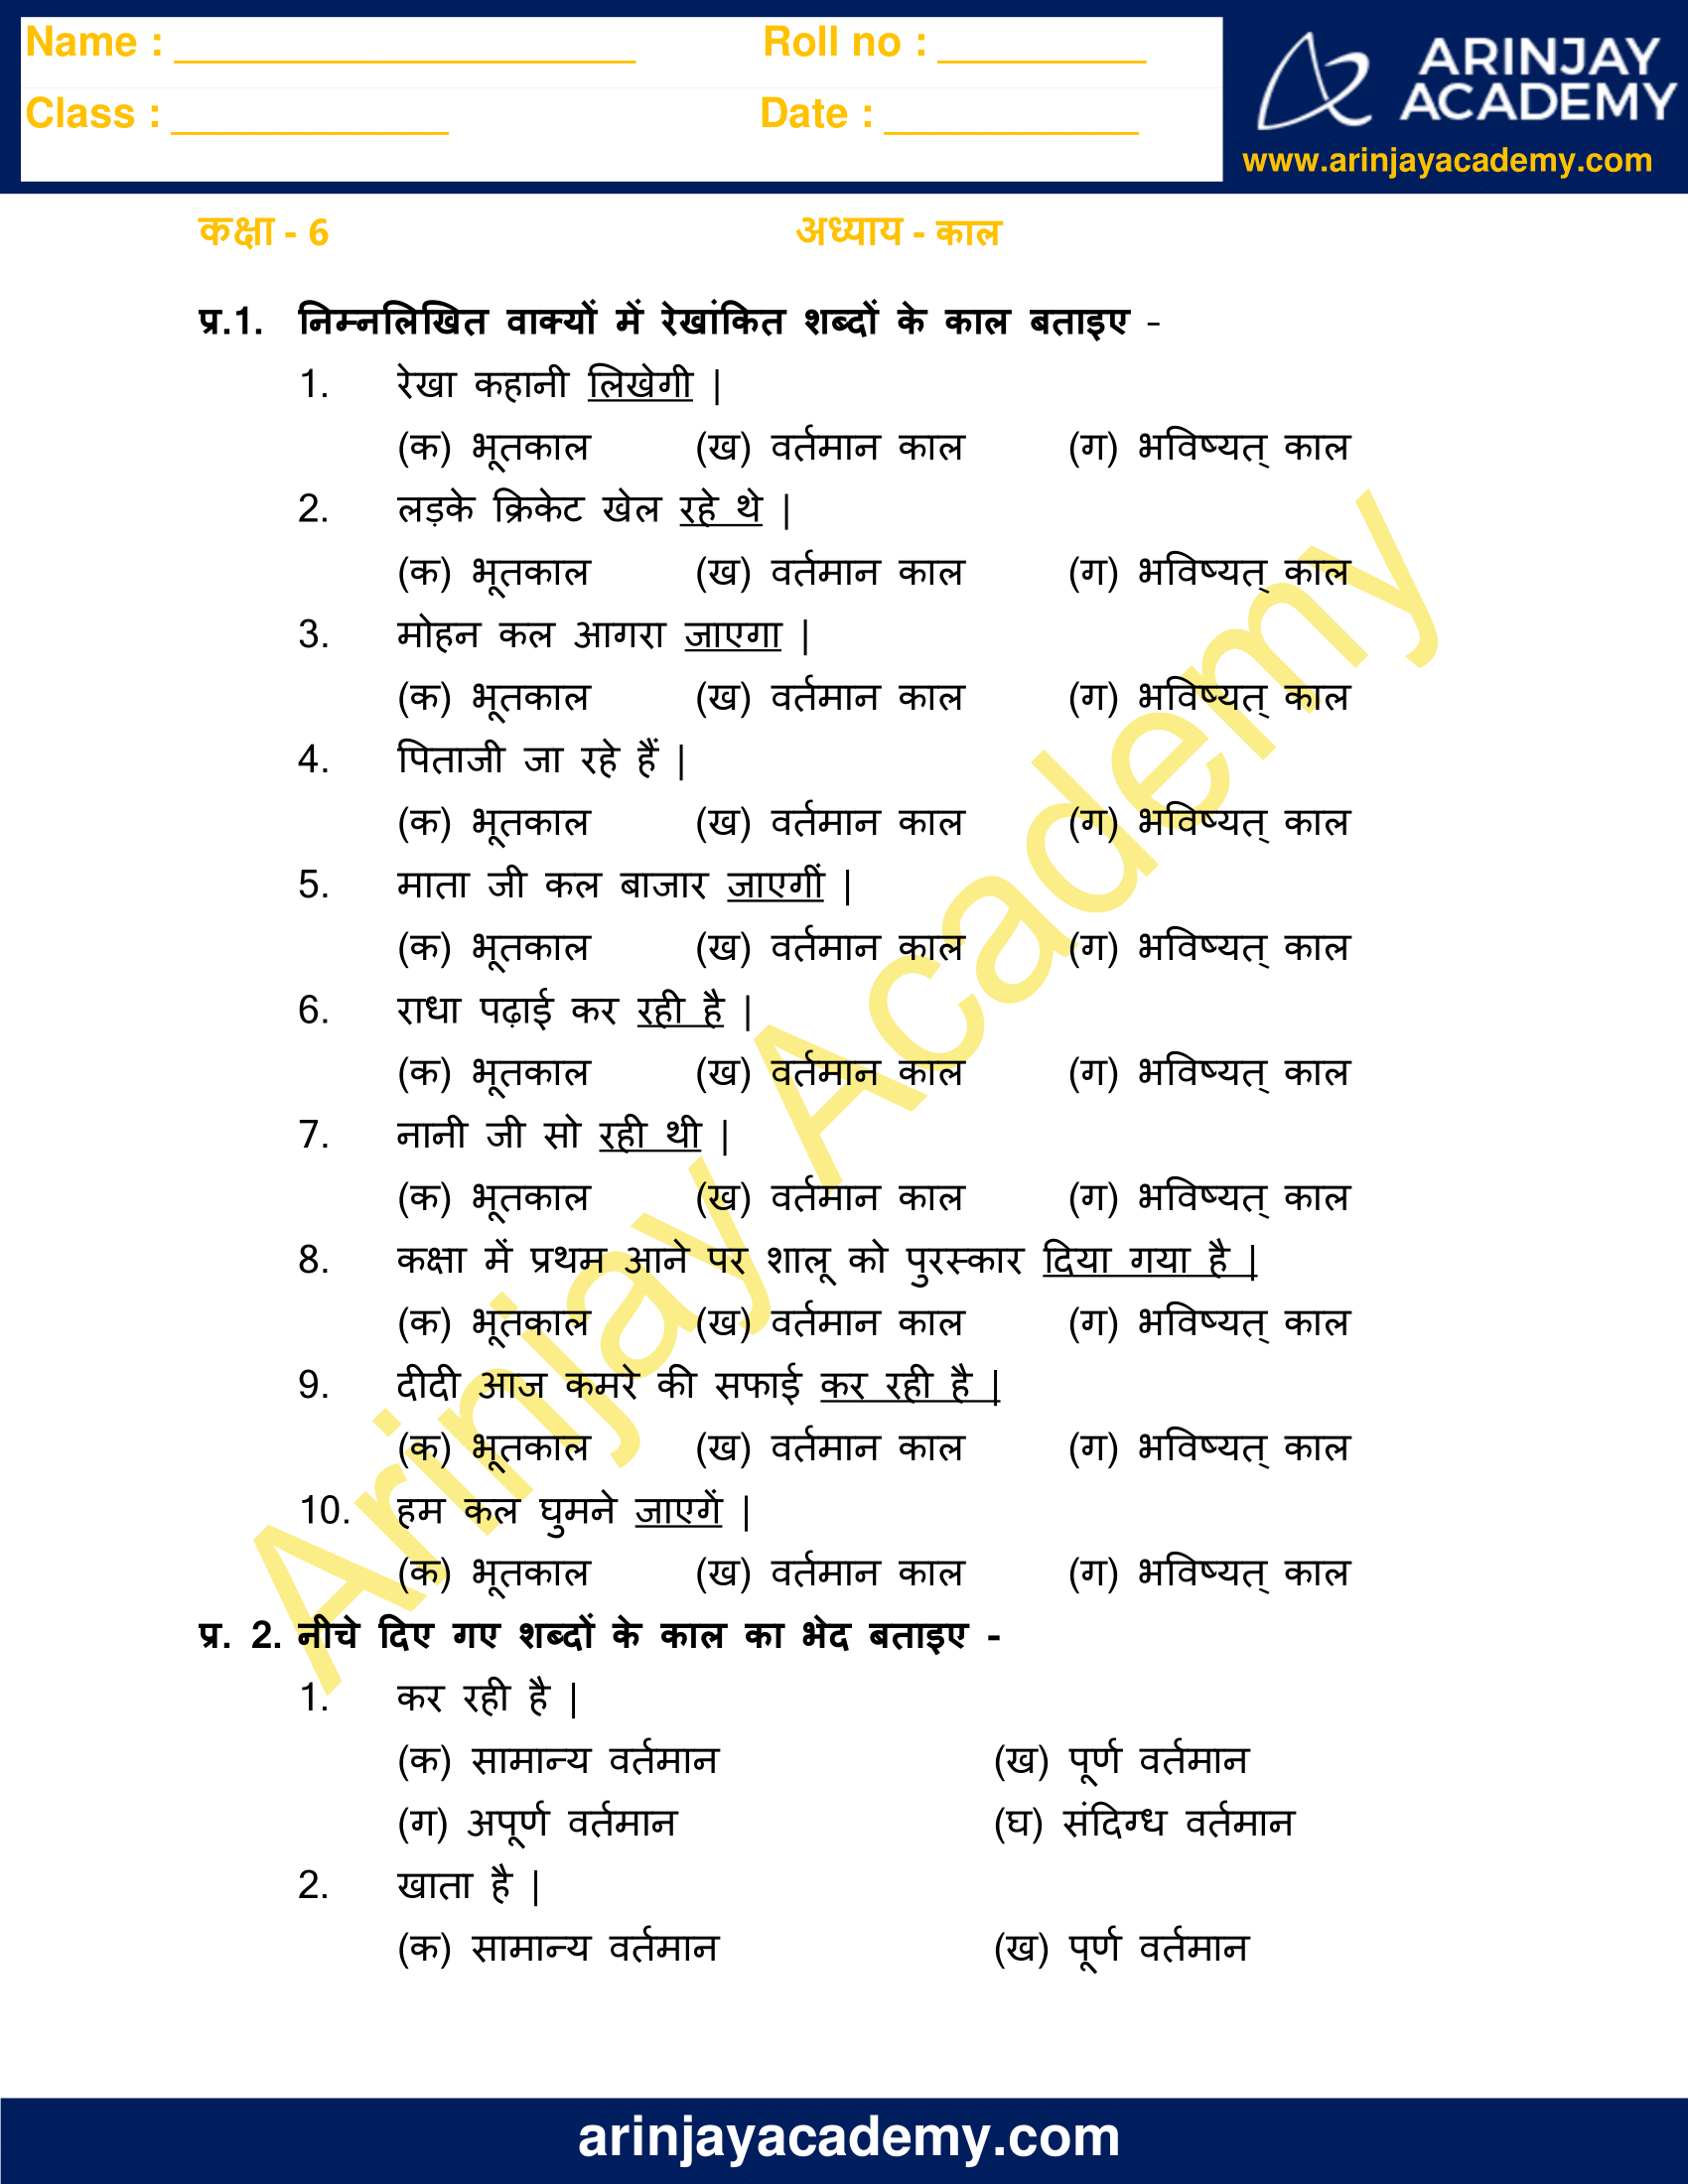 hindi-grammar-work-sheet-collection-for-classes-56-7-8-matra-work